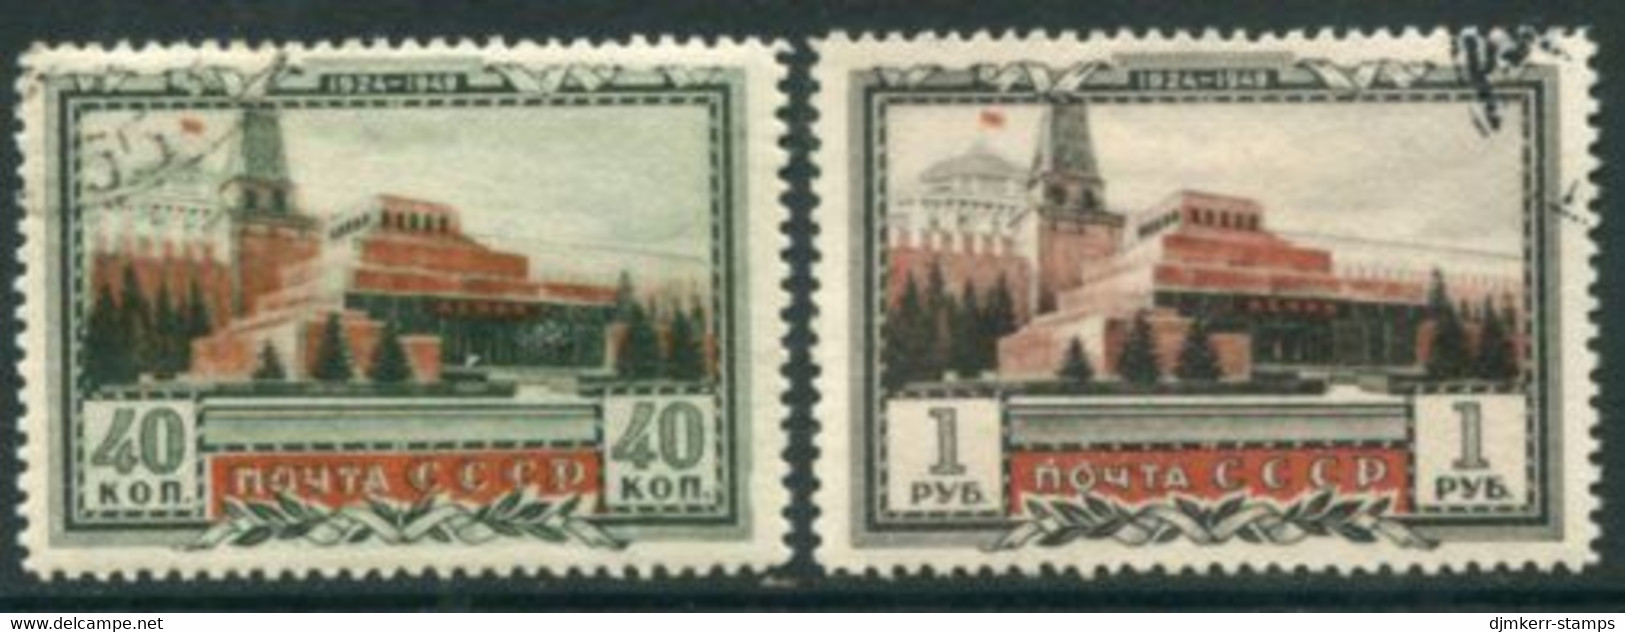 SOVIET UNION 1949 Lenin Death Anniversary Used.  Michel 1314-15 - Used Stamps